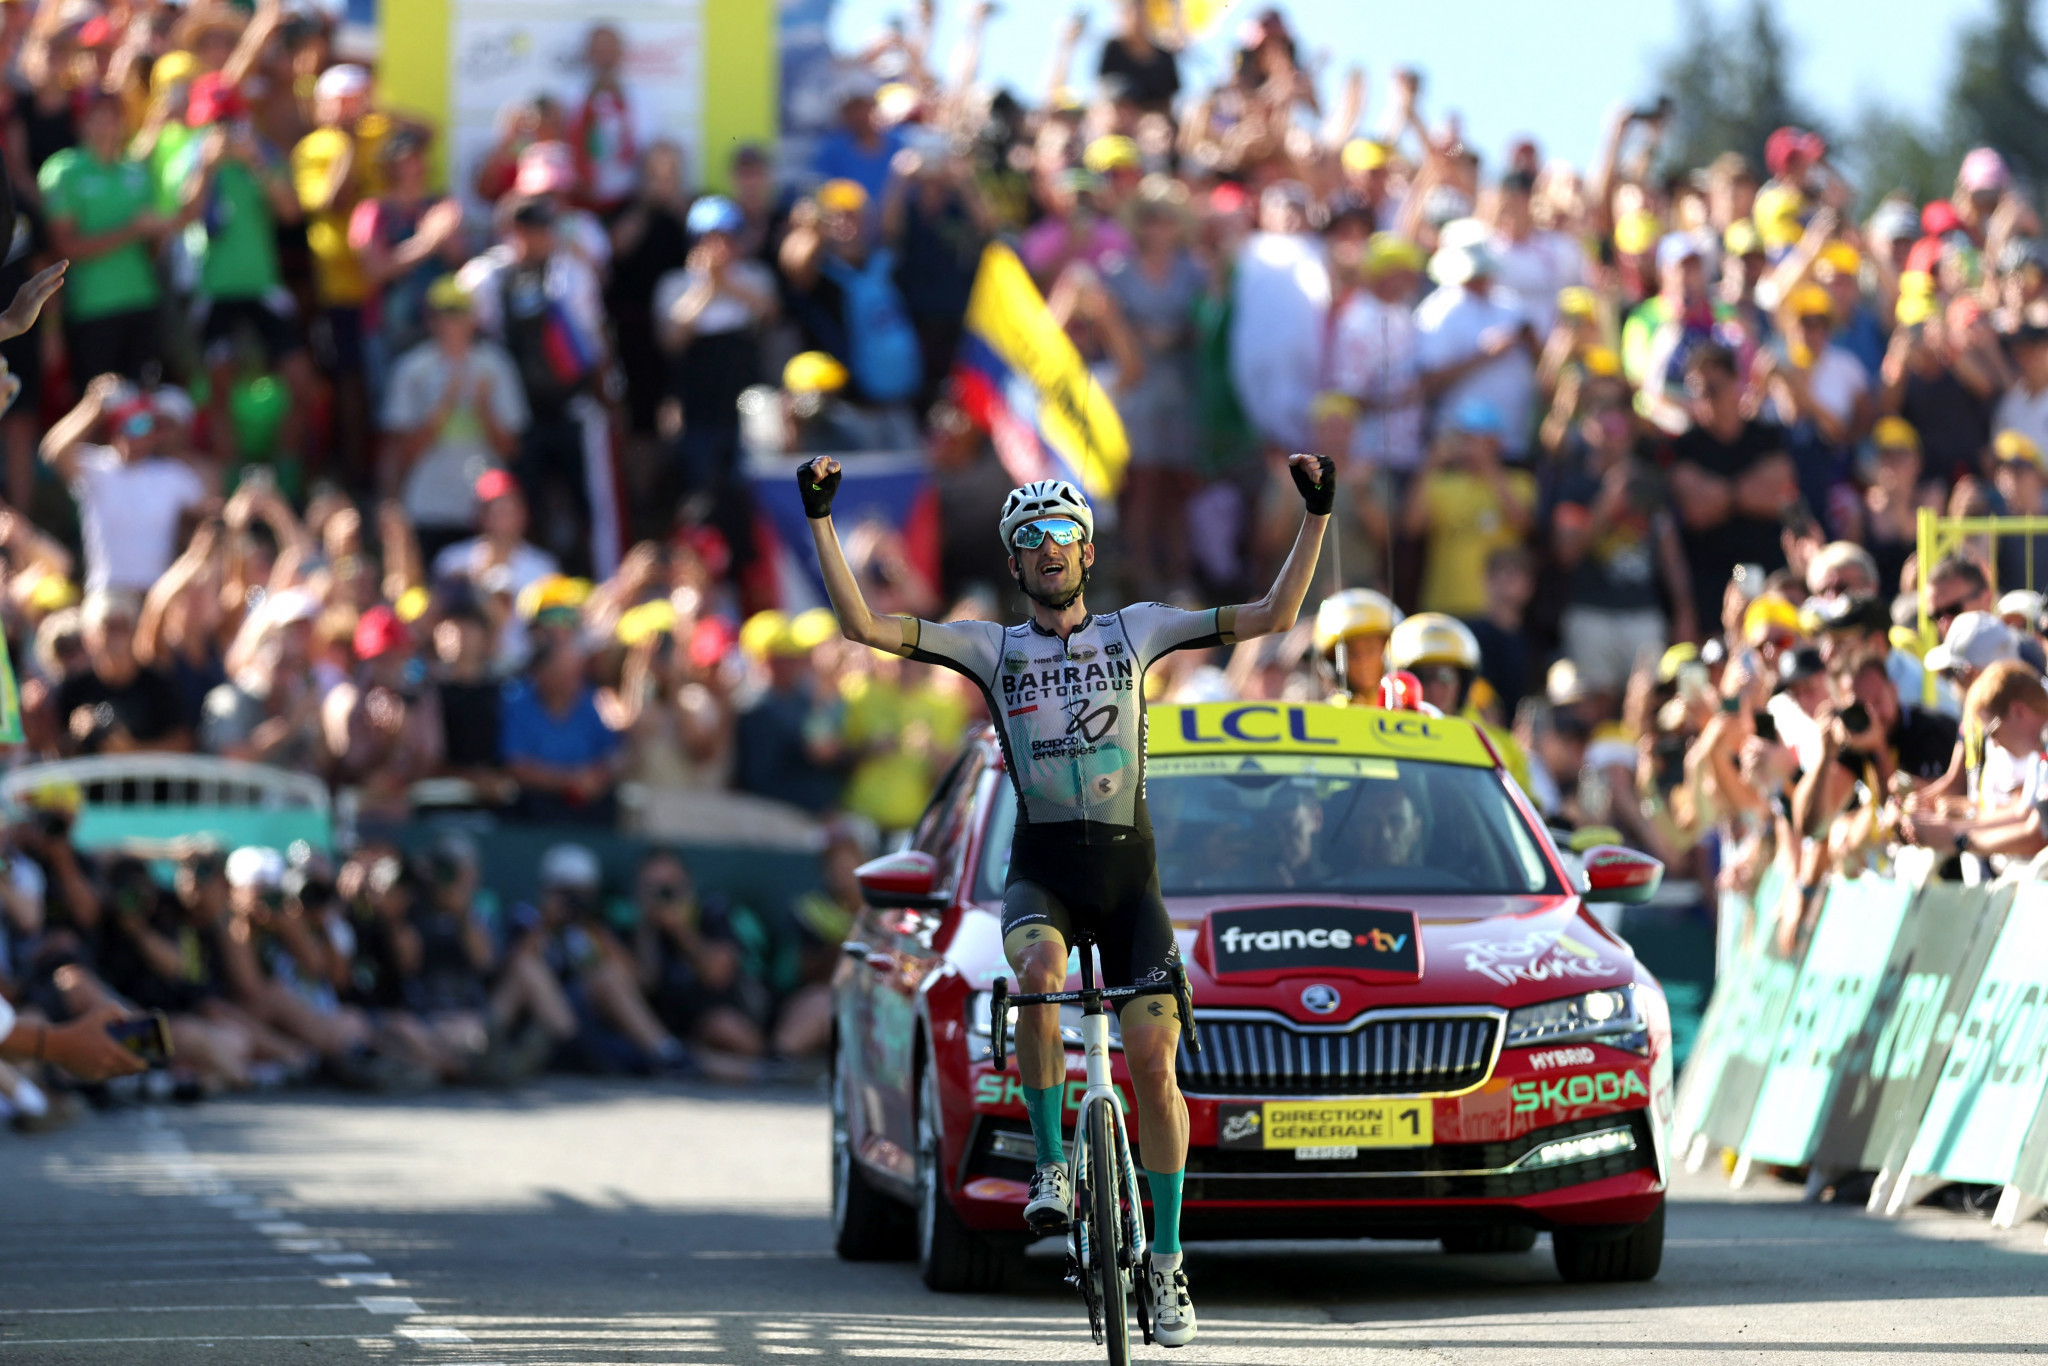 Selfie-taking fan causes big crash at Tour de France as Poels wins stage 15